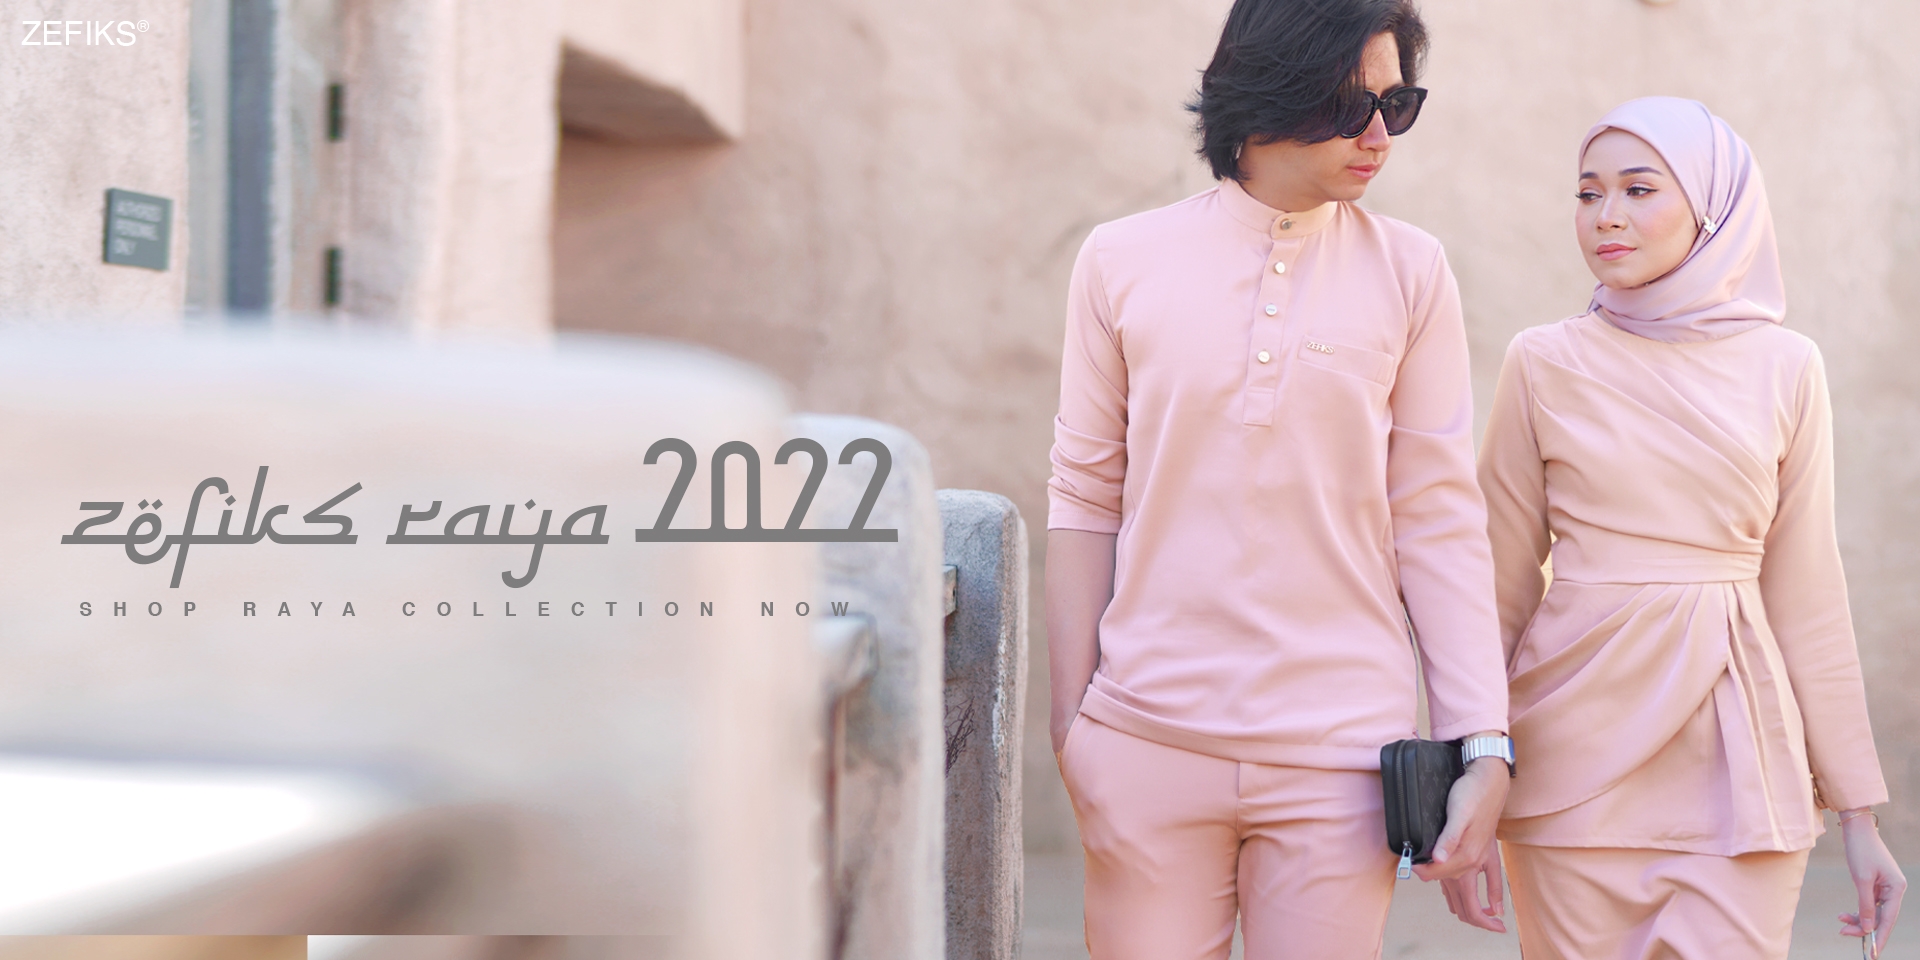 Baju raya 2022 perempuan